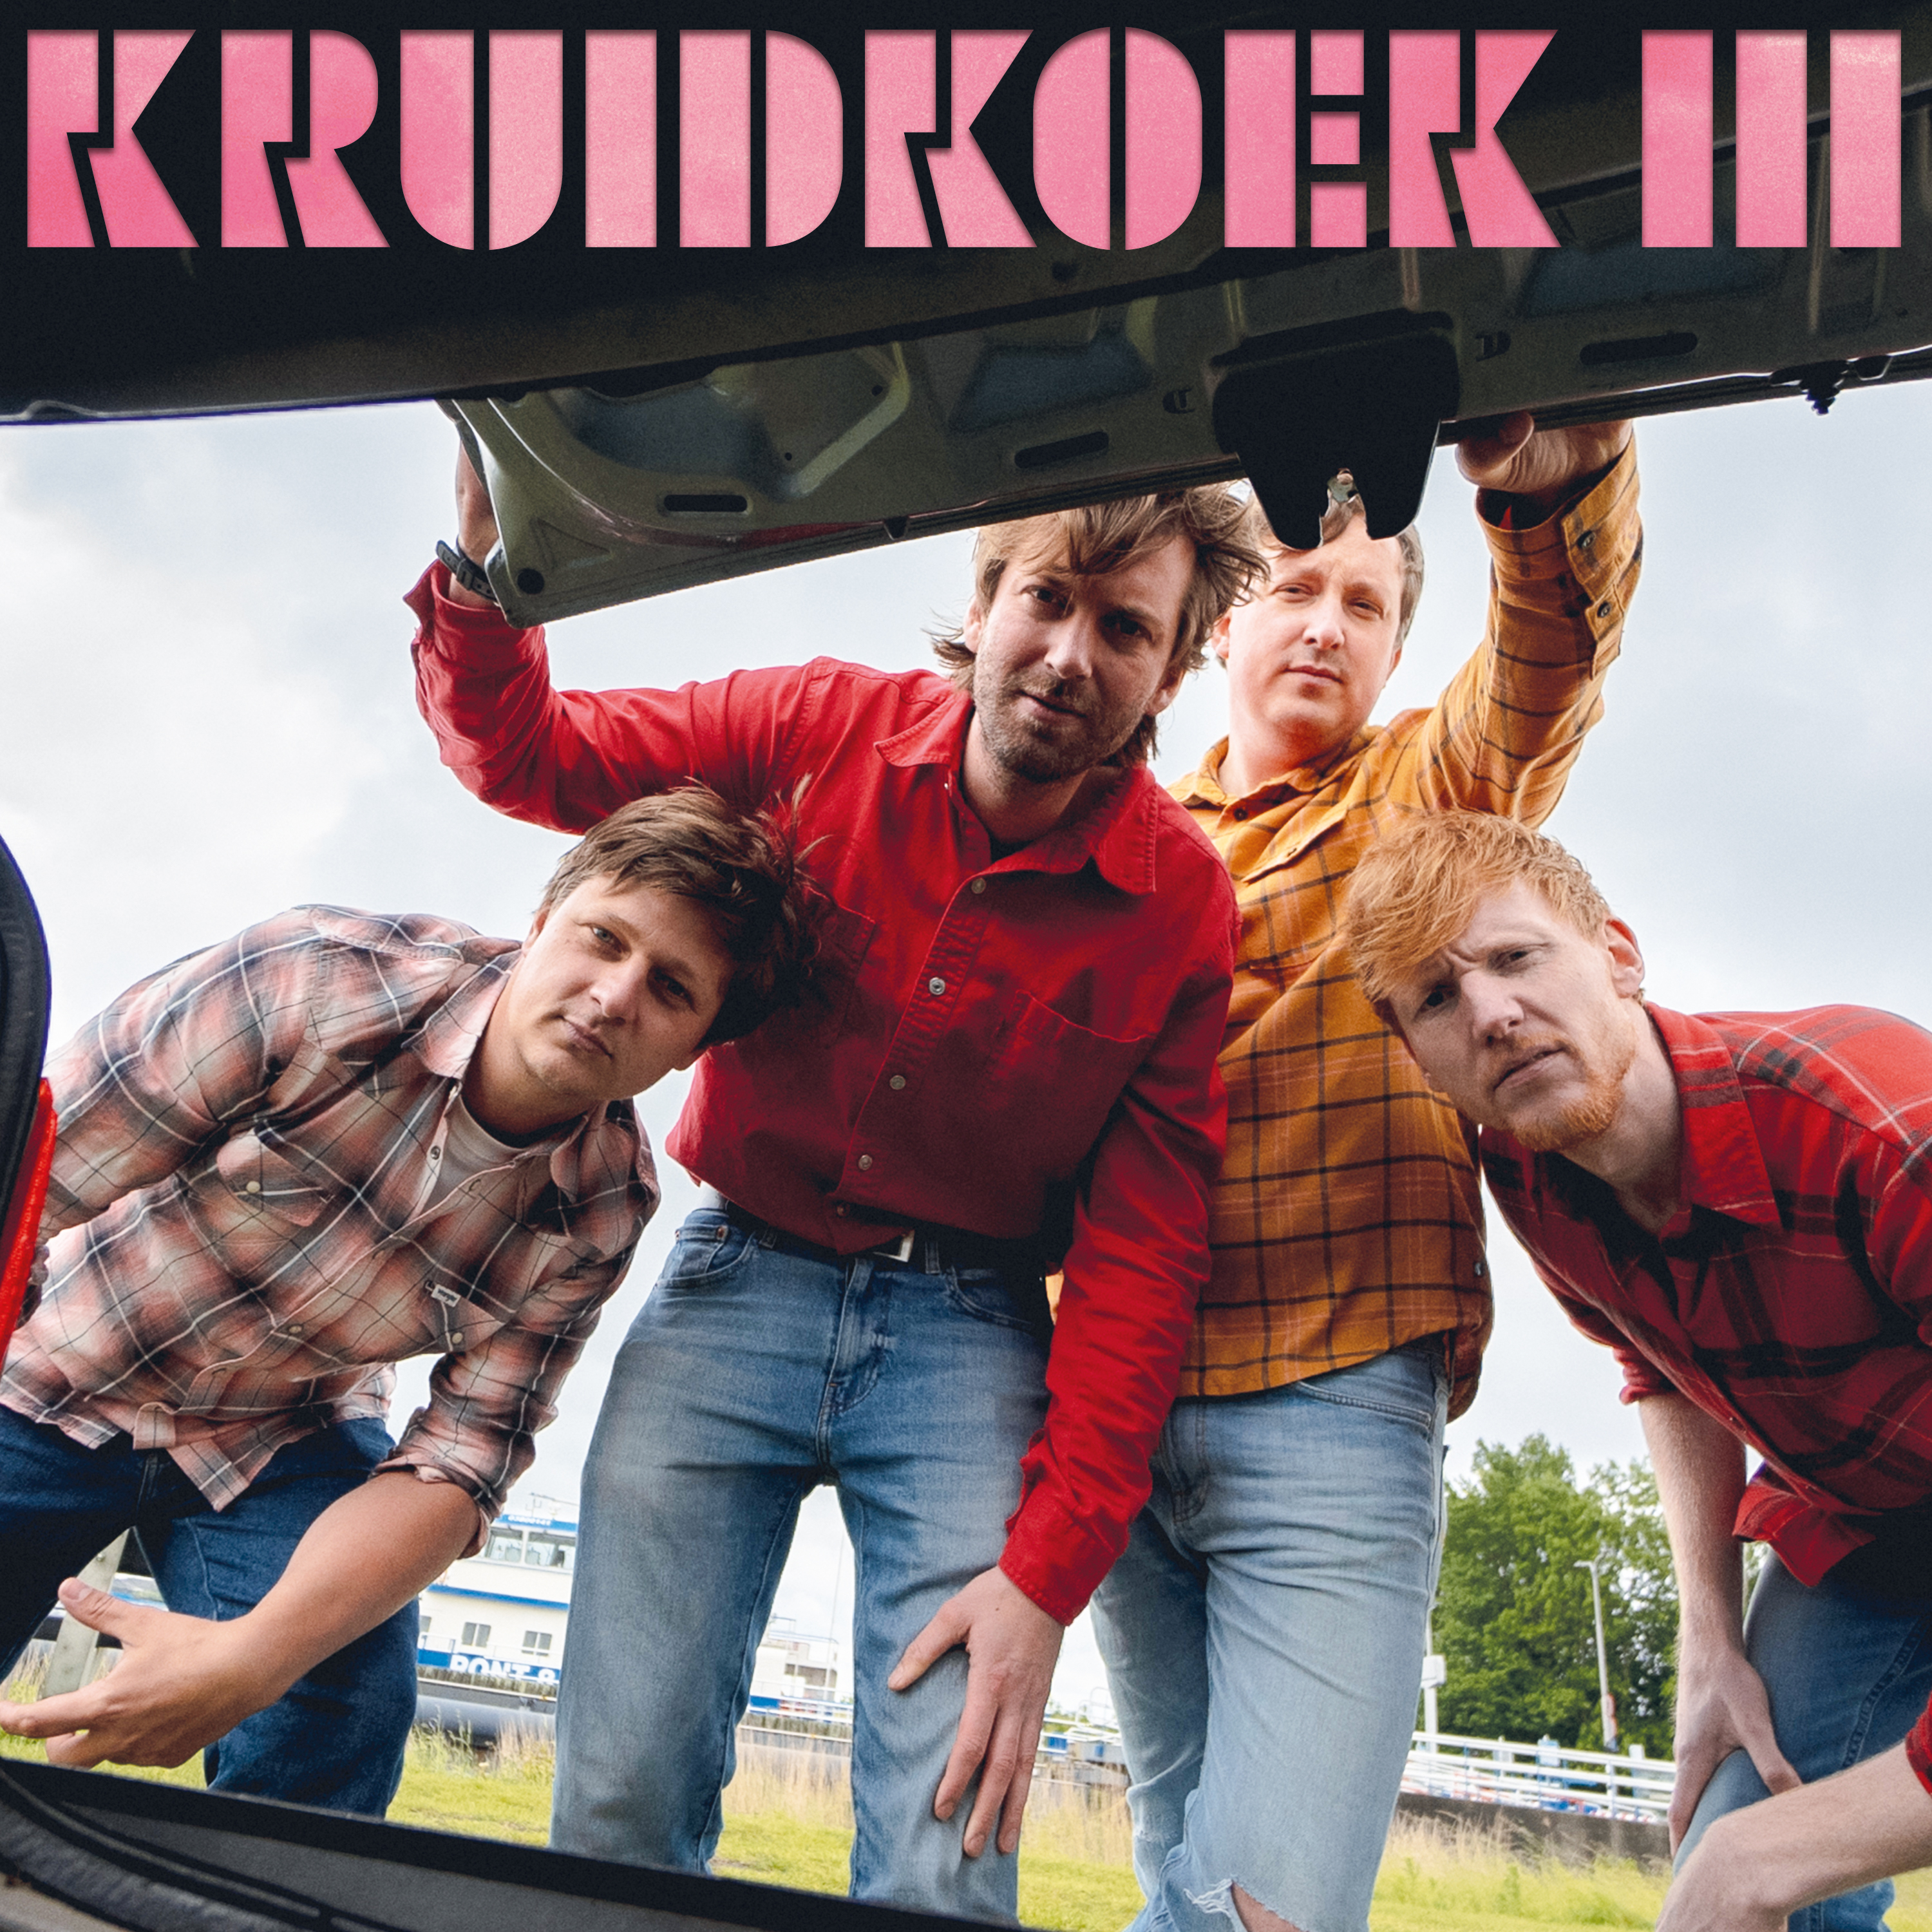 Kruidkoek III CD 